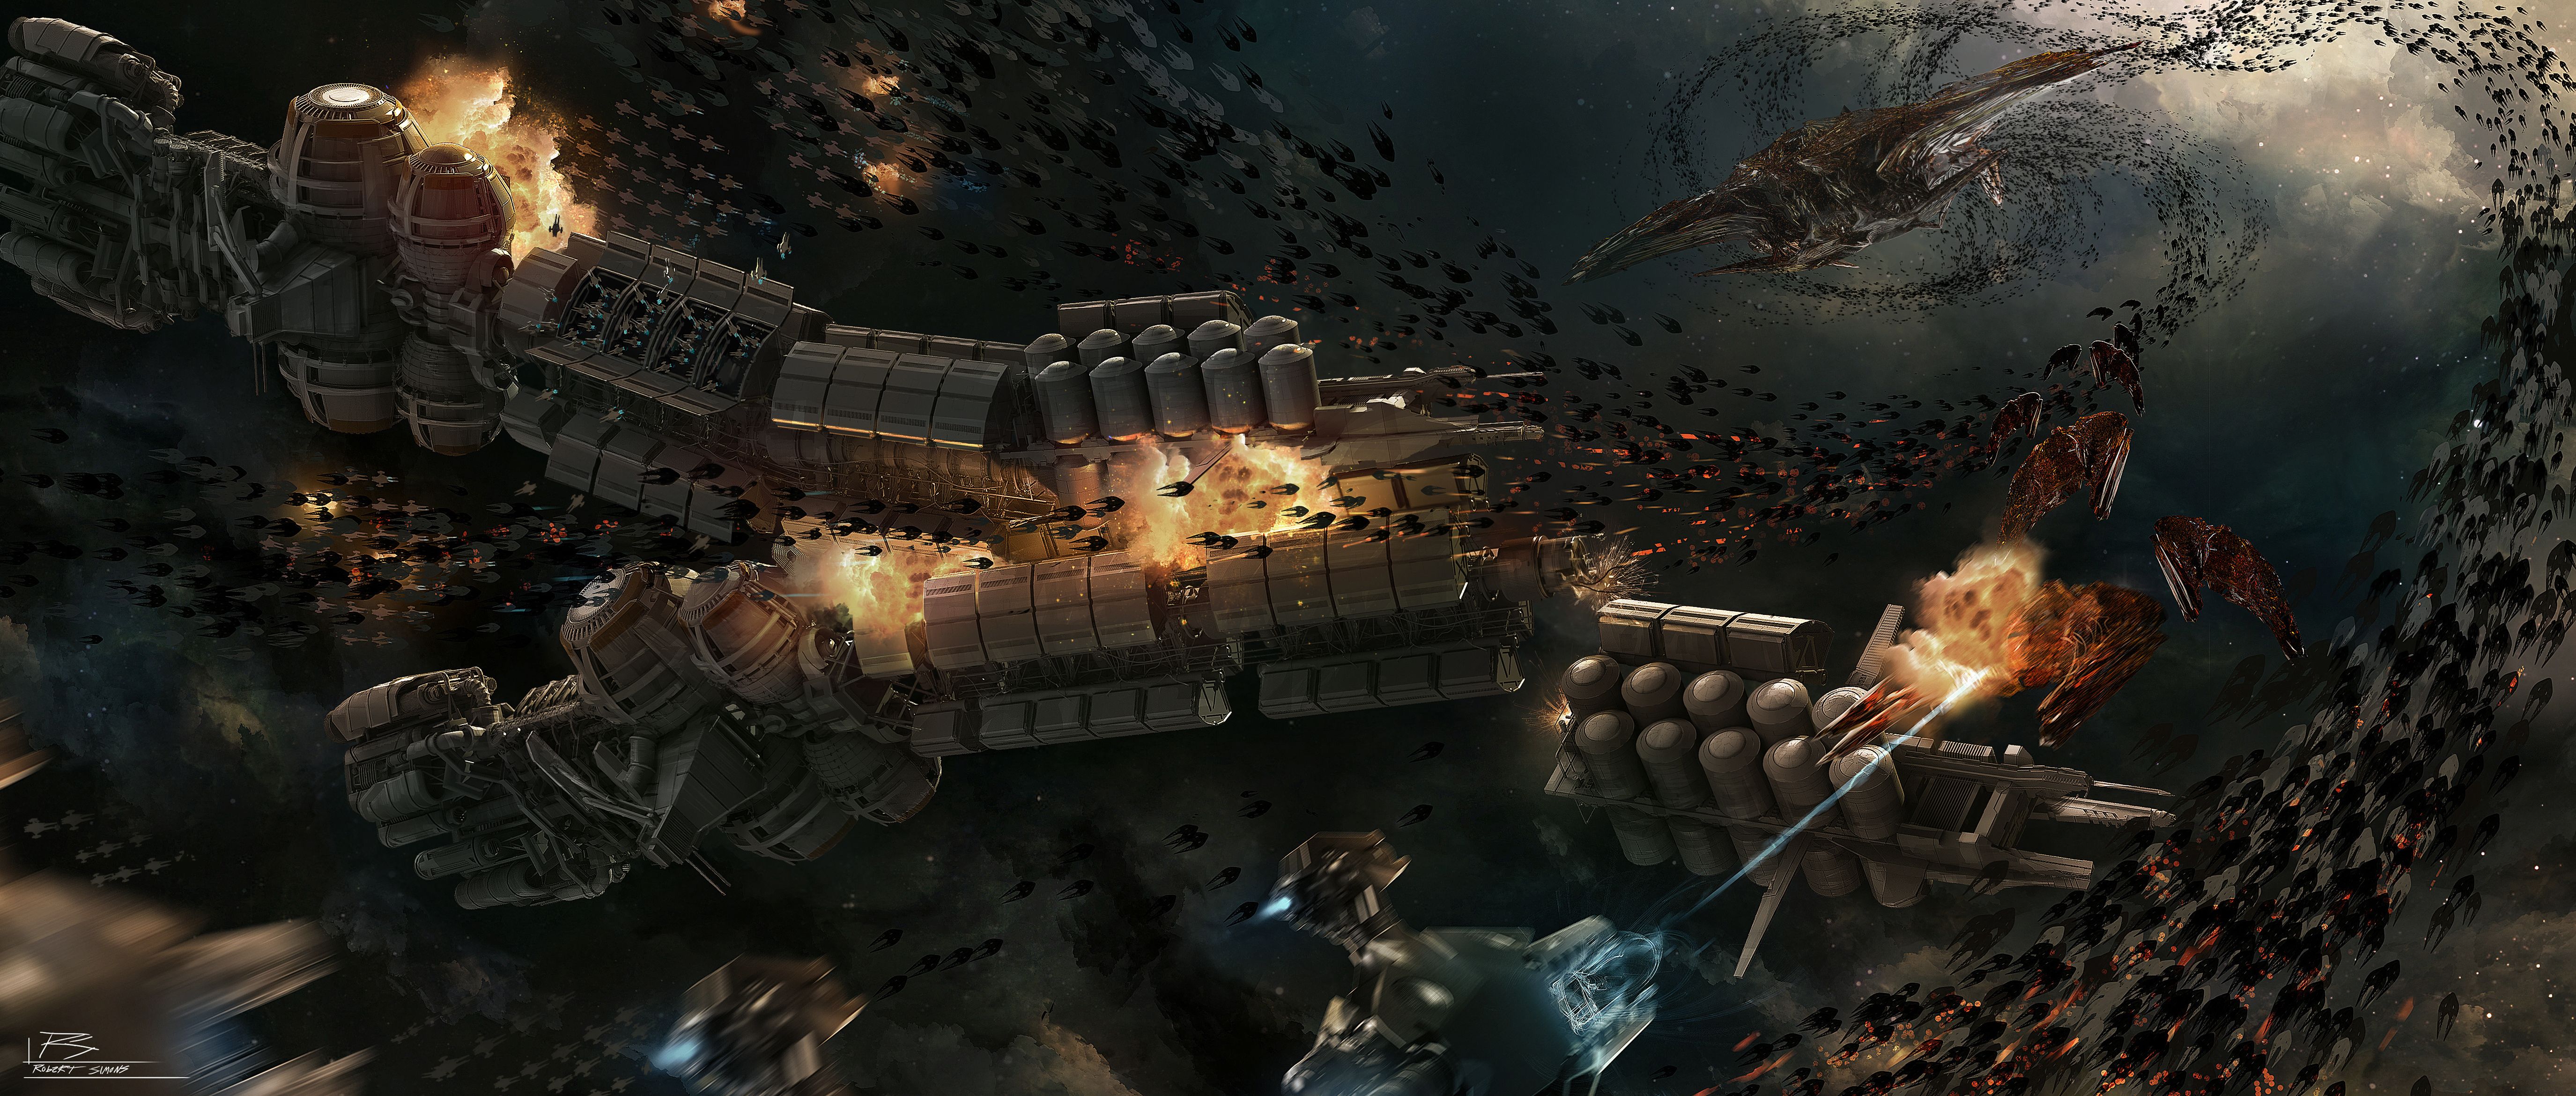 Image Aliens Ender's Game Space film Ships Battles 5500x2340